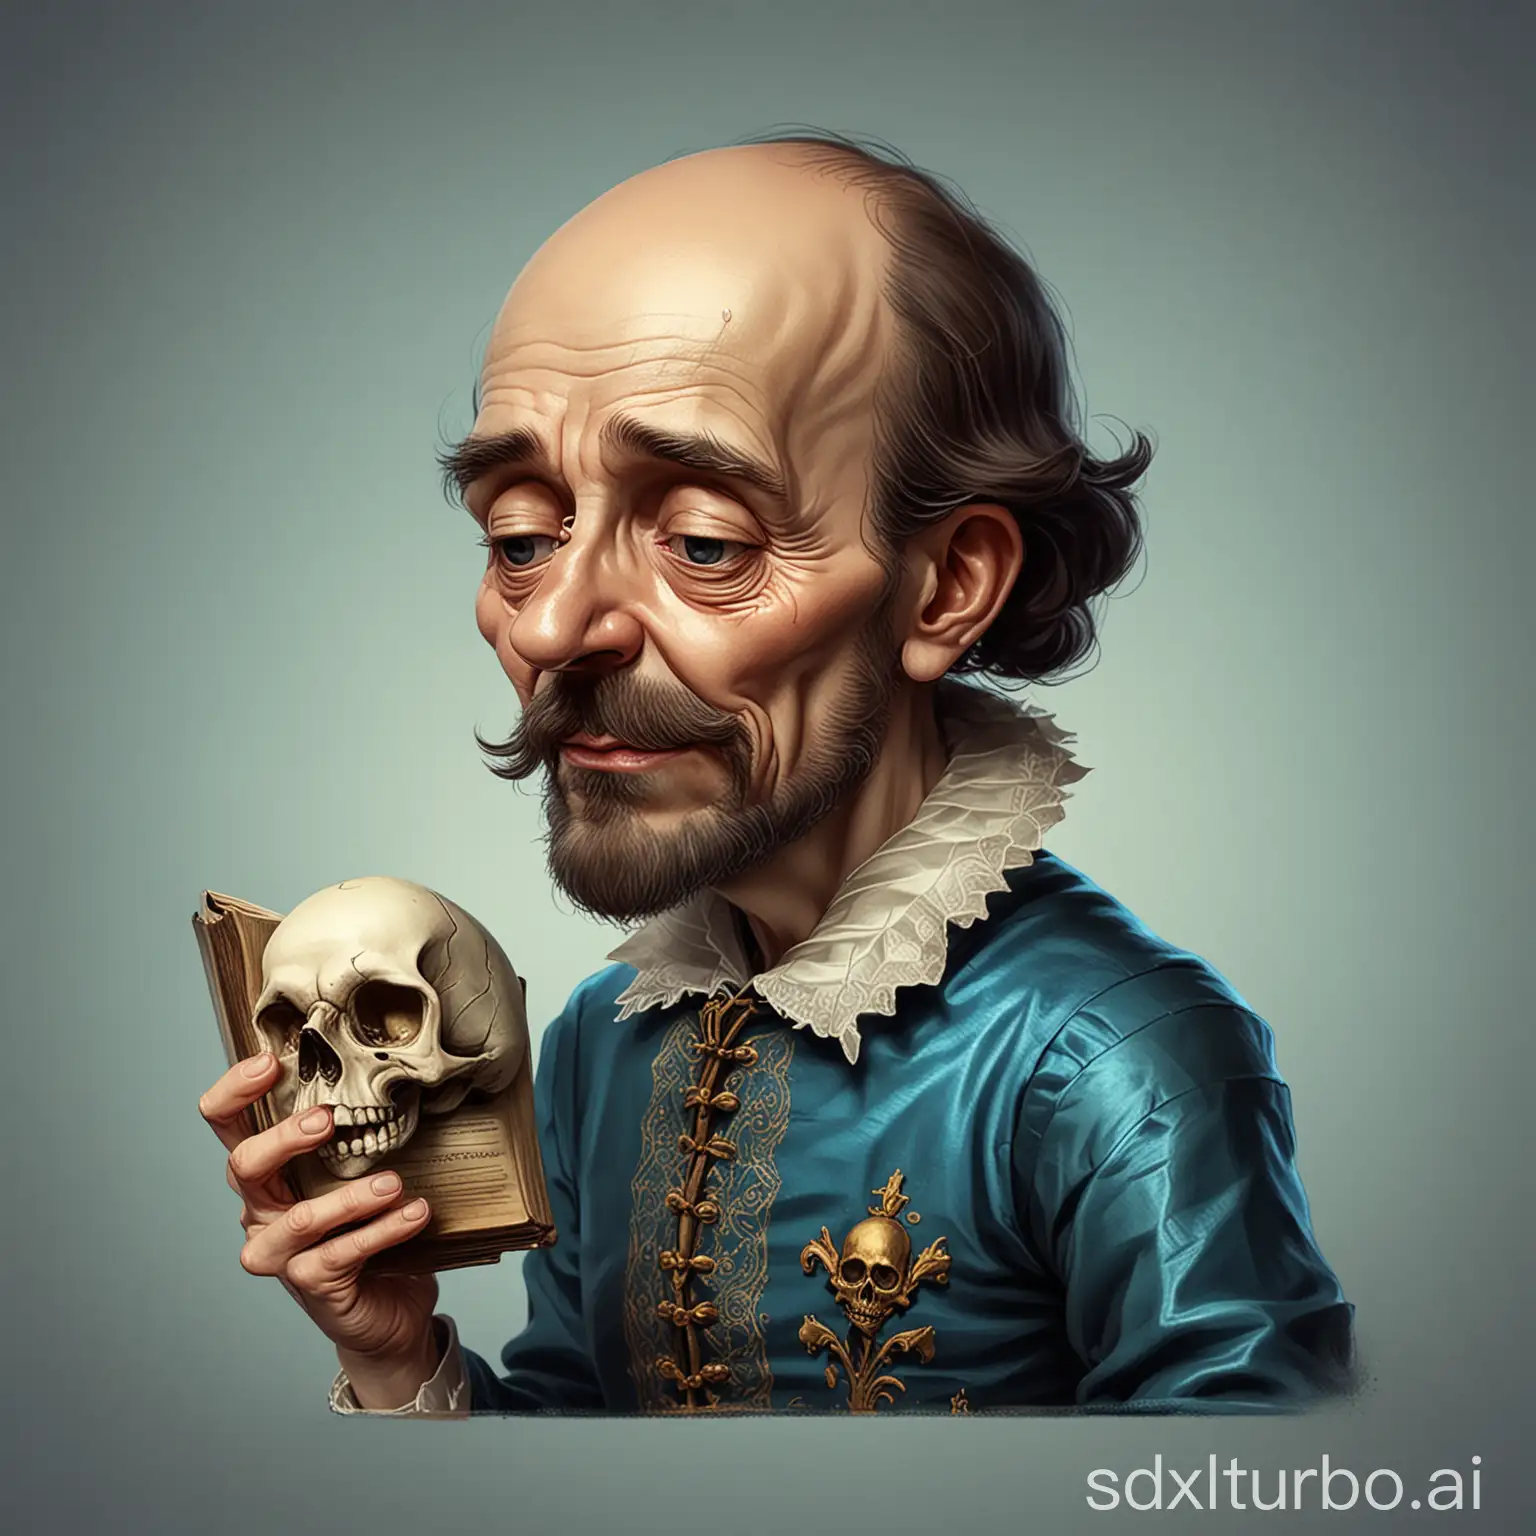 Cartoonish-Caricature-of-William-Shakespeare-Holding-Book-and-Skull